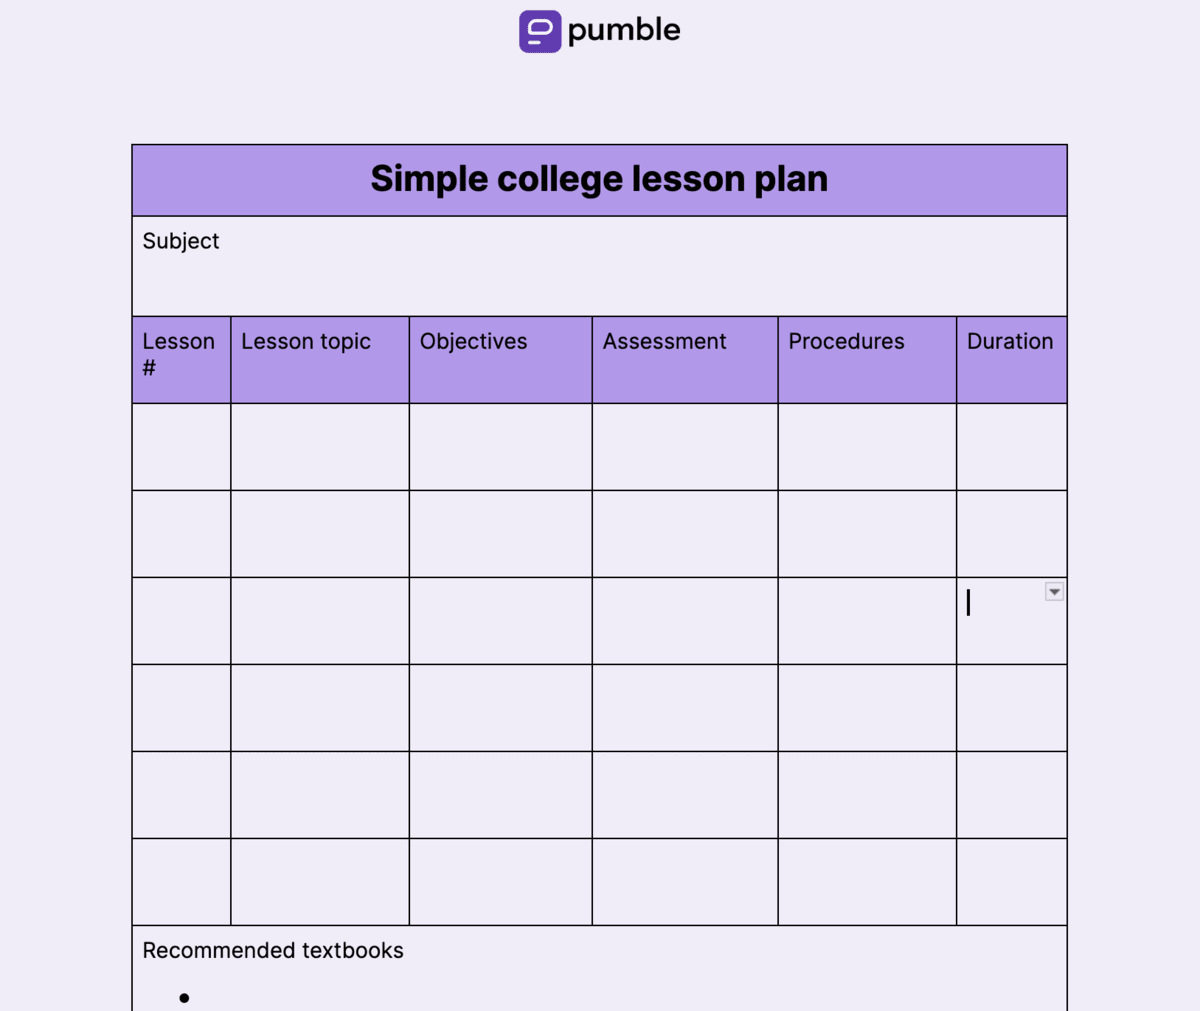 Simple college lesson plan